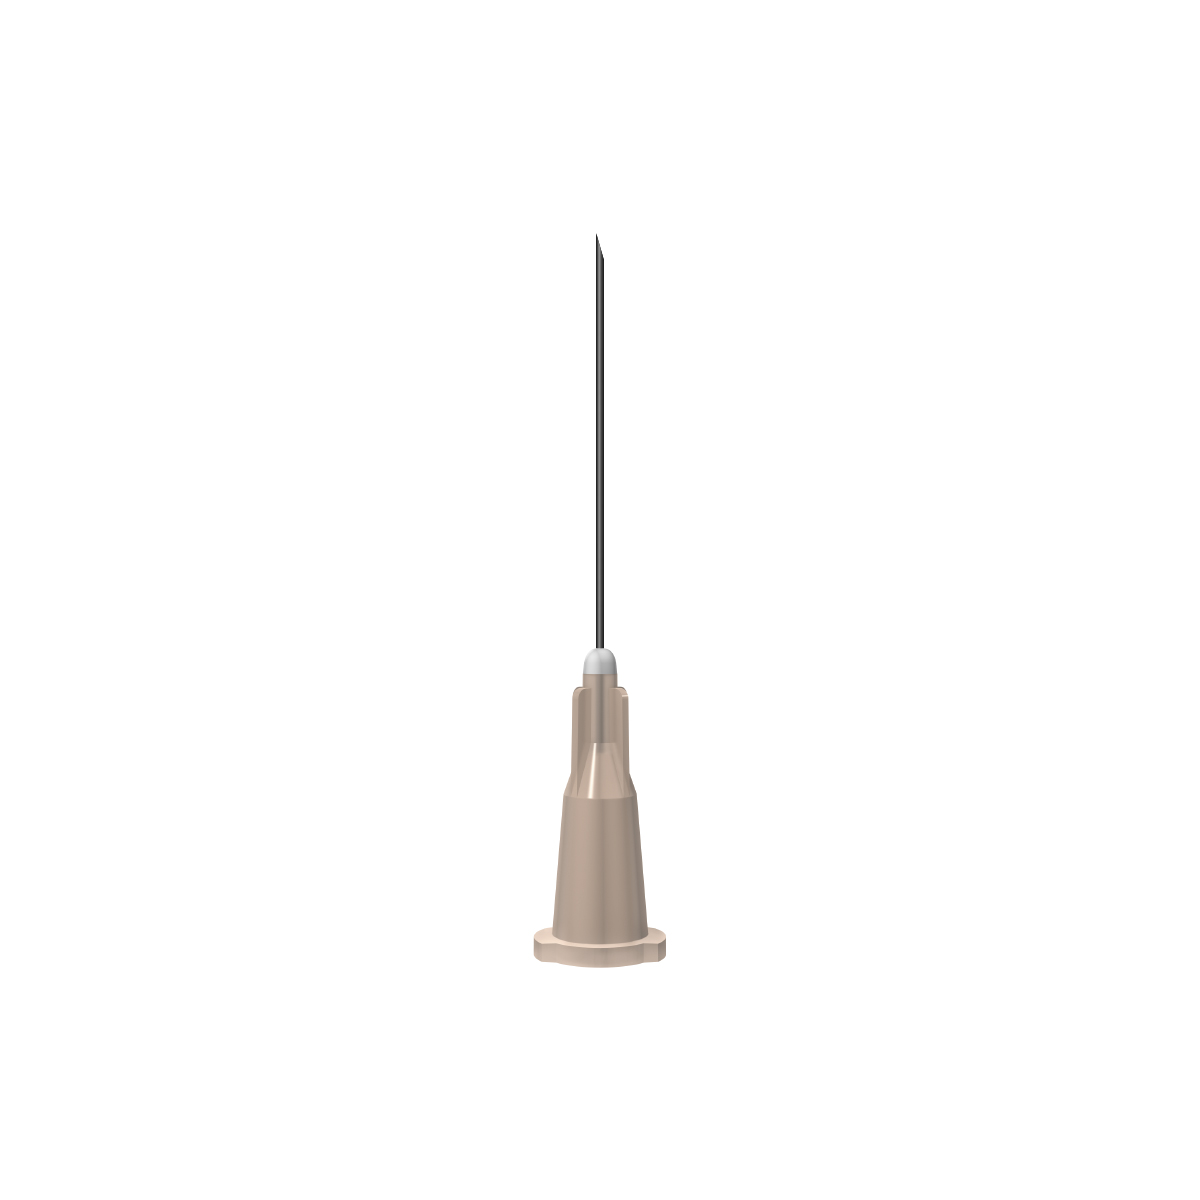 BBraun: Brown 26G 25mm (1 inch) needle